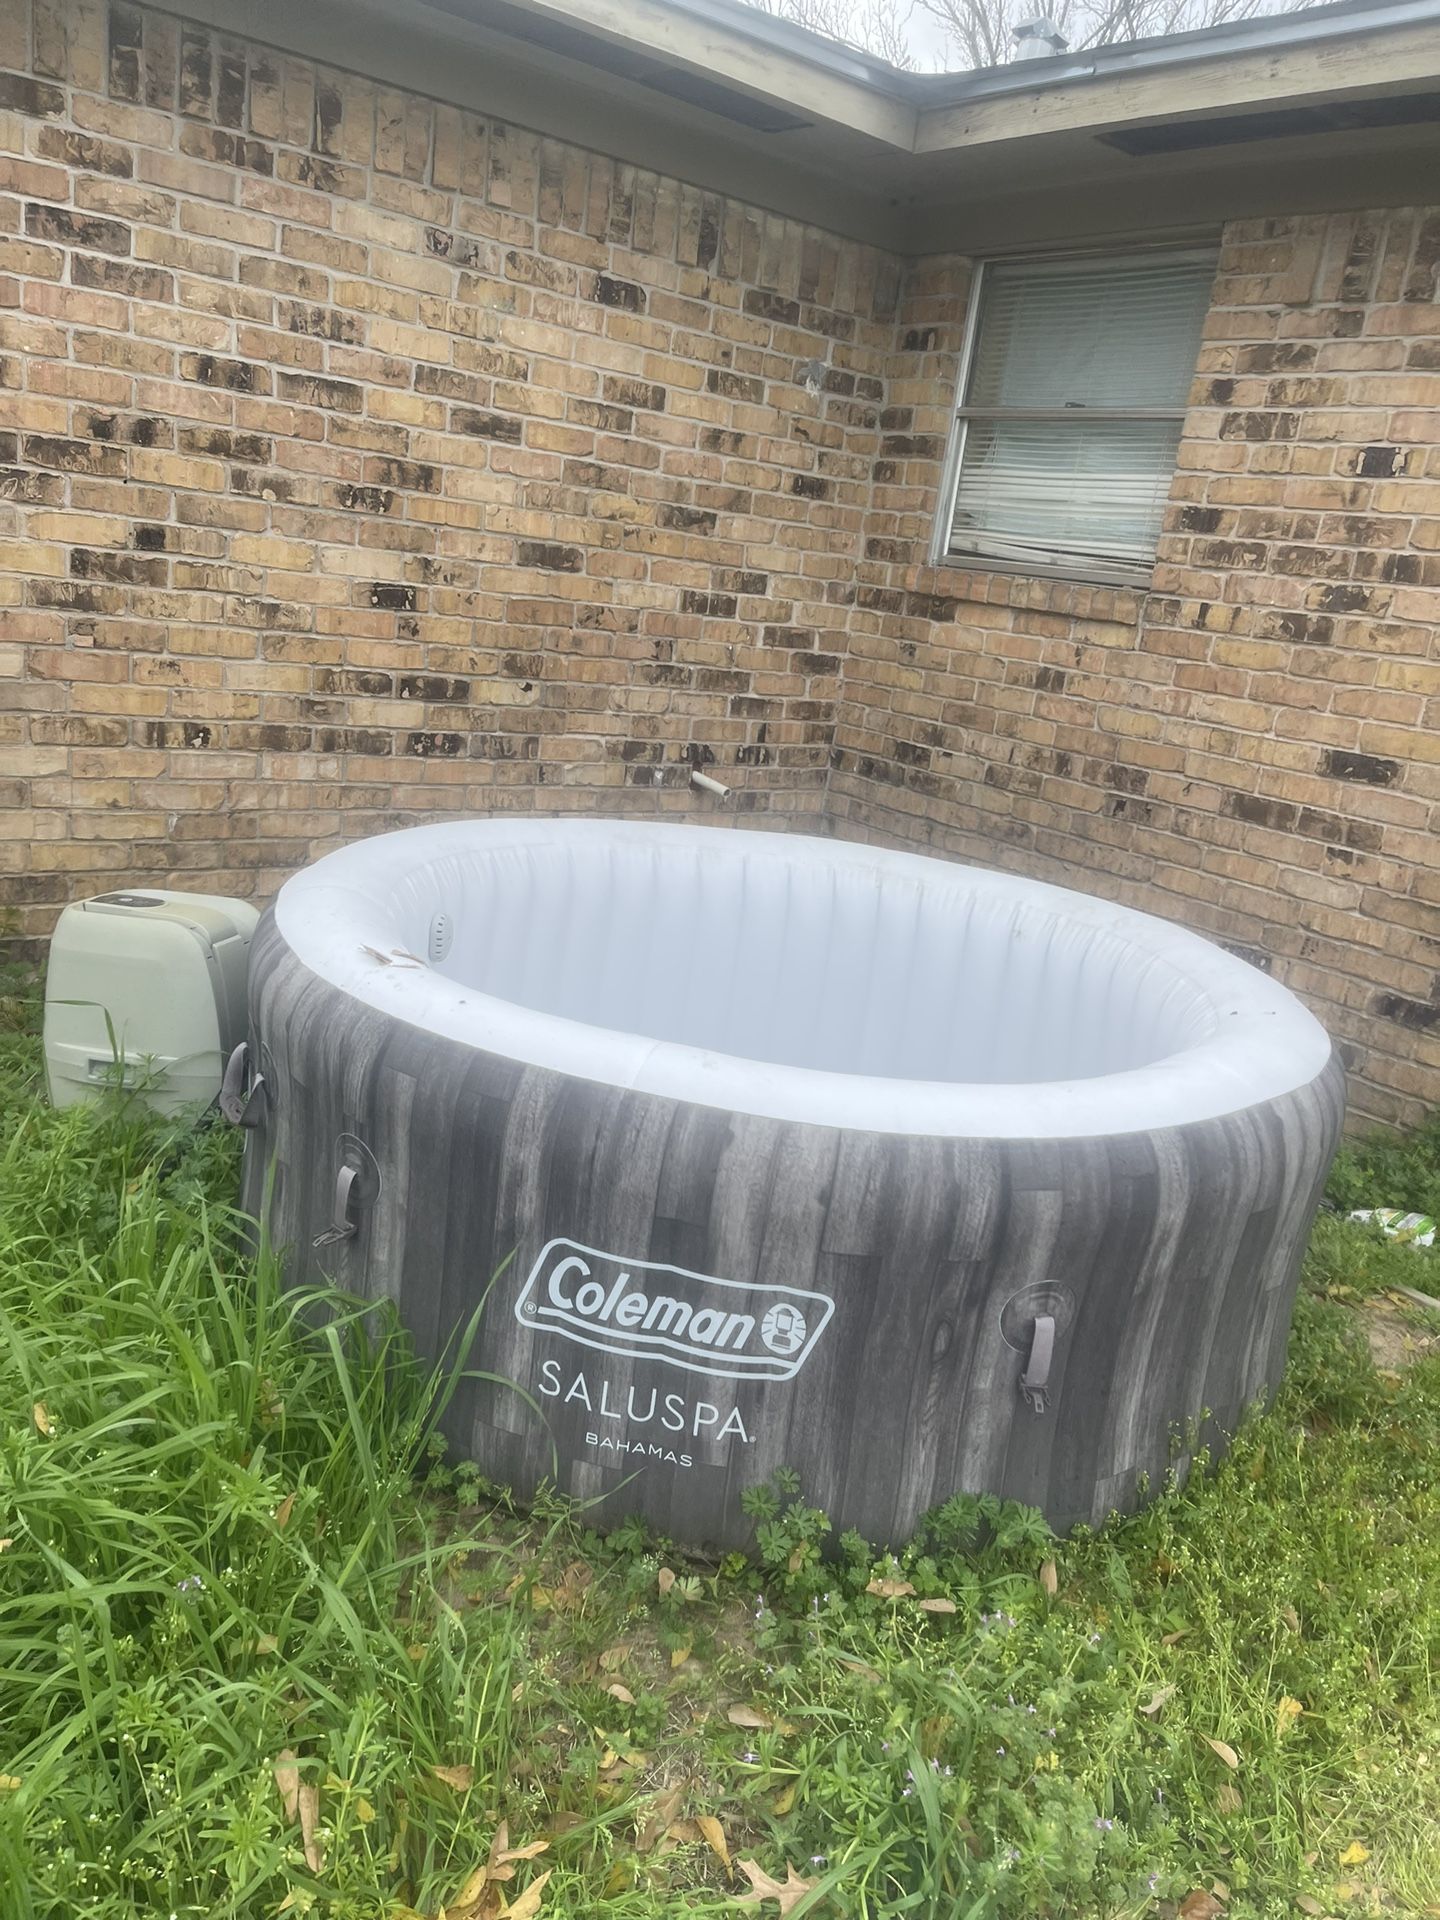 Coleman Inflatable Saluspa Hot Tub